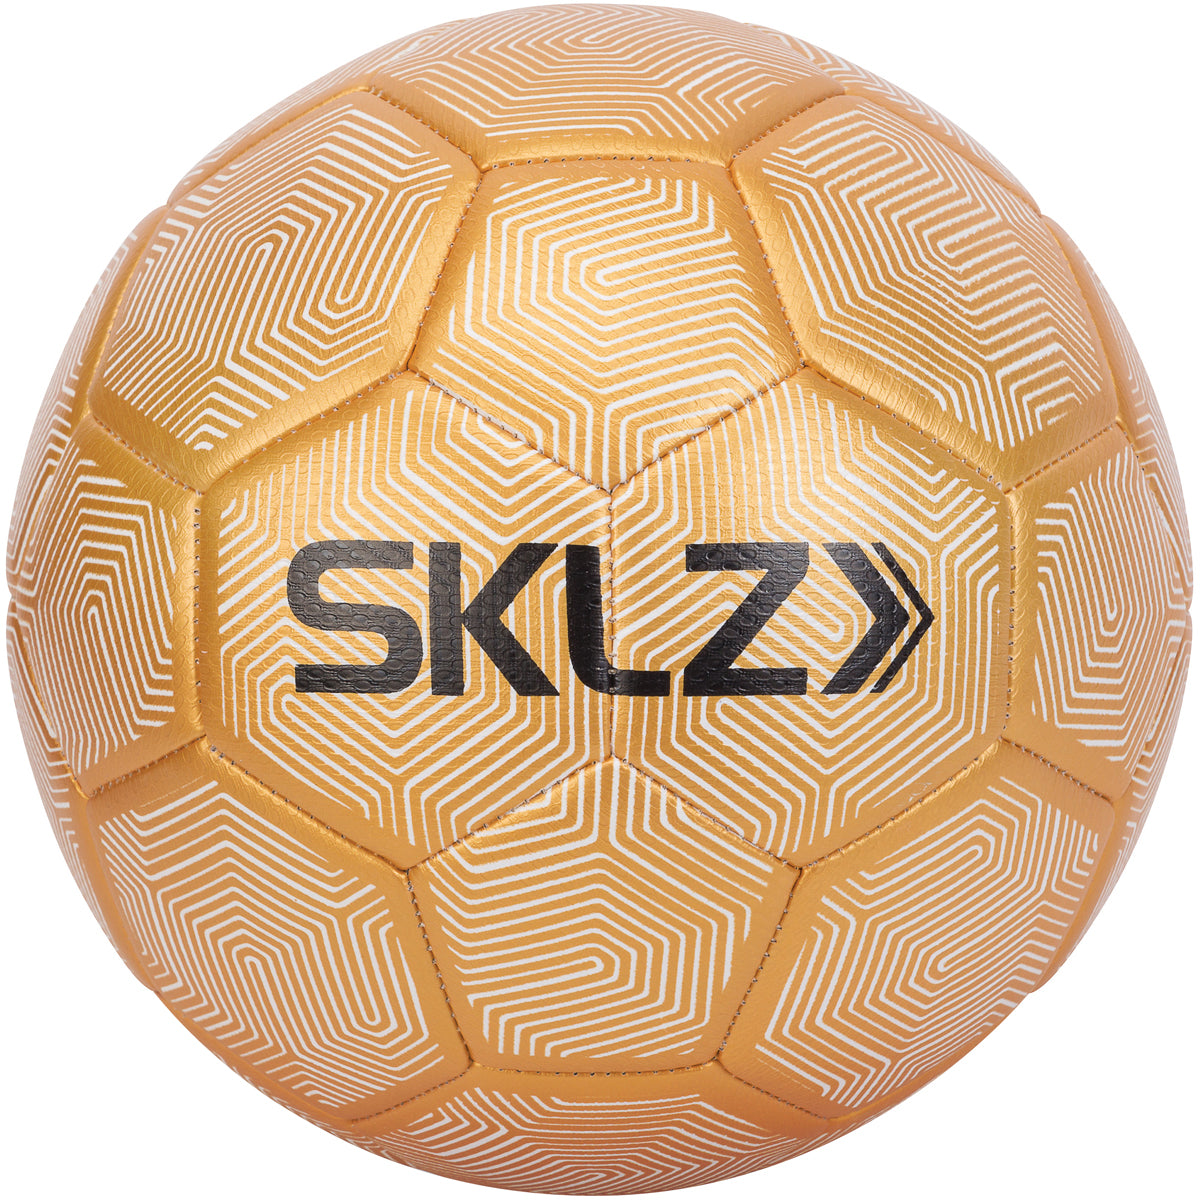 SKLZ Golden Touch Size 3 Weighted Soccer Ball - Gold SKLZ